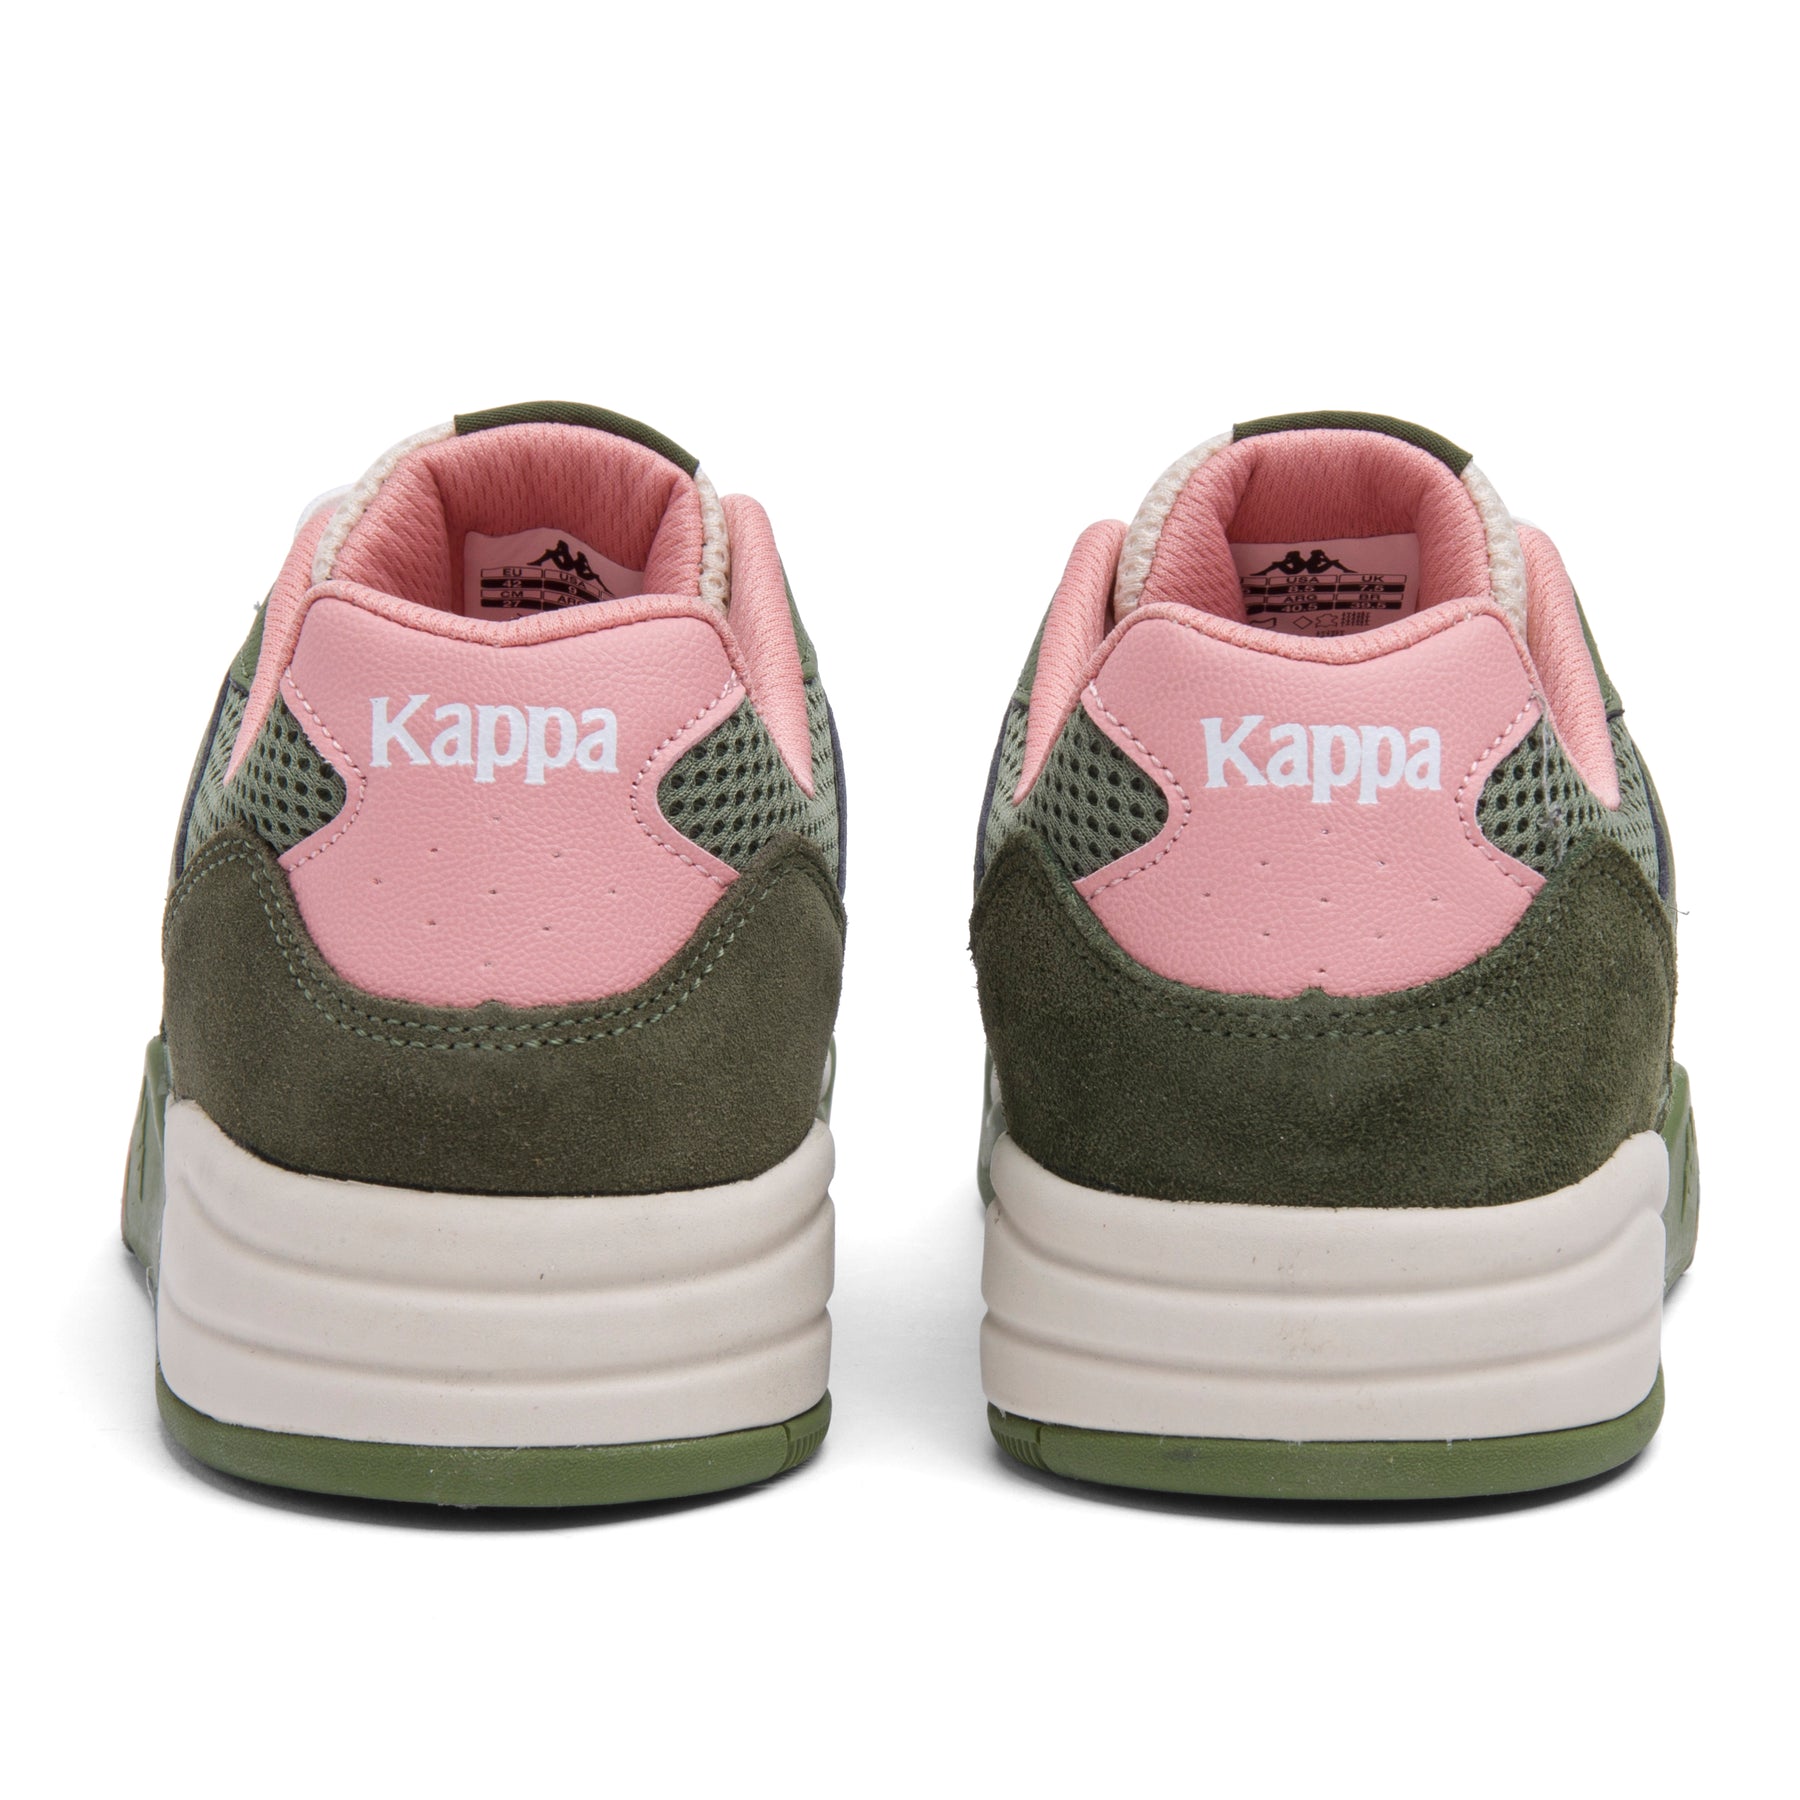 Green – - Kappa Sneakers Authentic 2 Olive Atlanta USA Pink